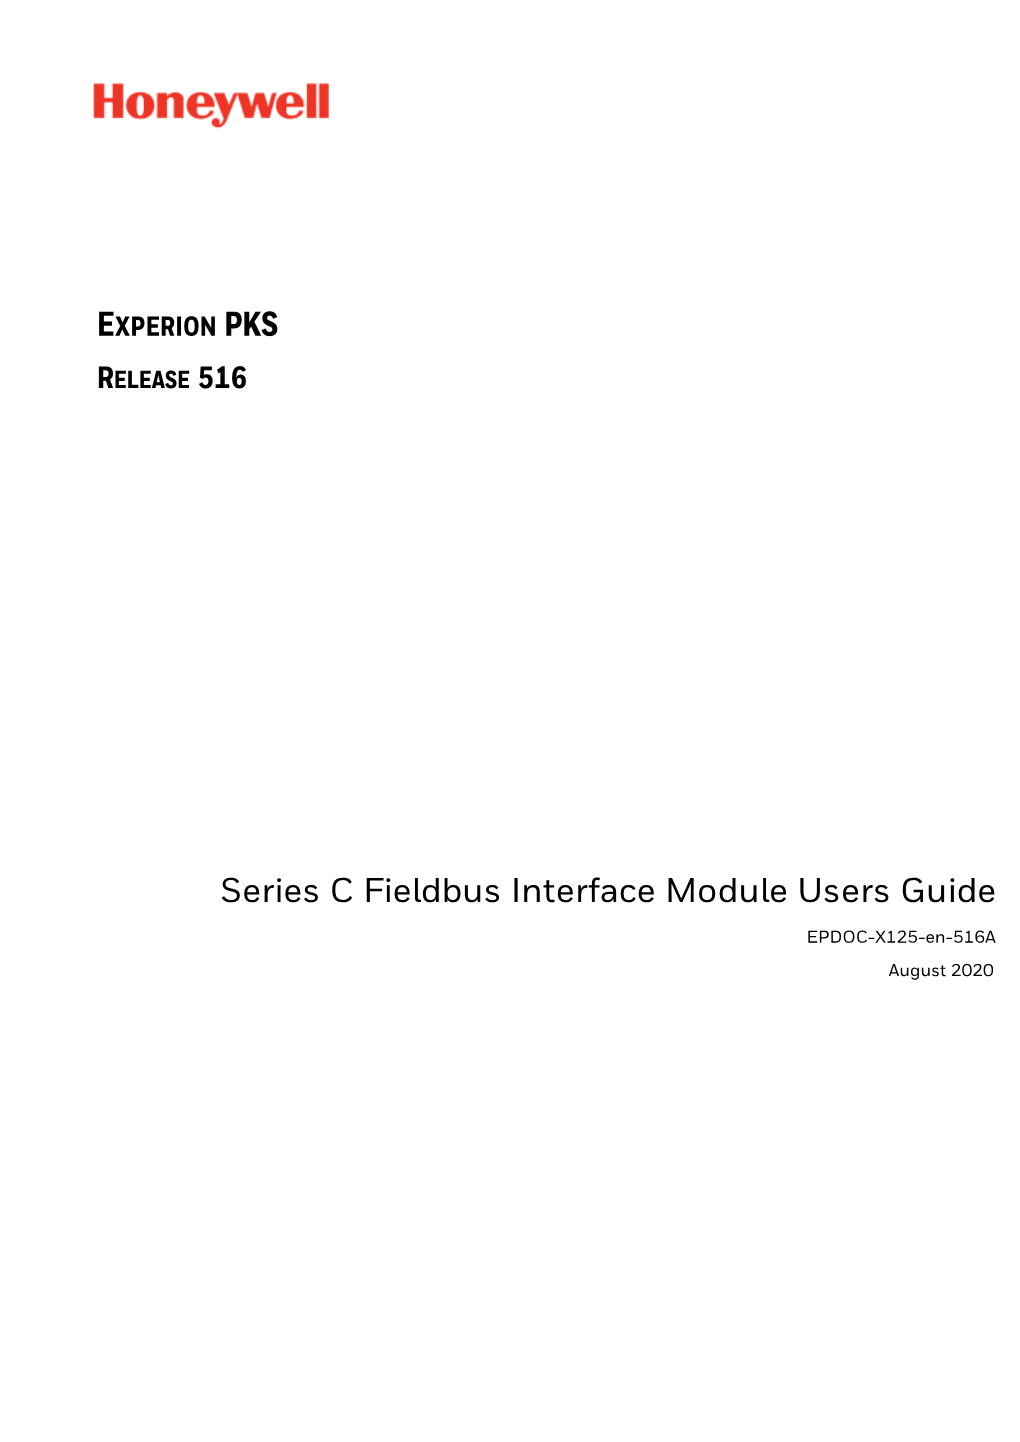 Series C Fieldbus Interface Module Users Guide